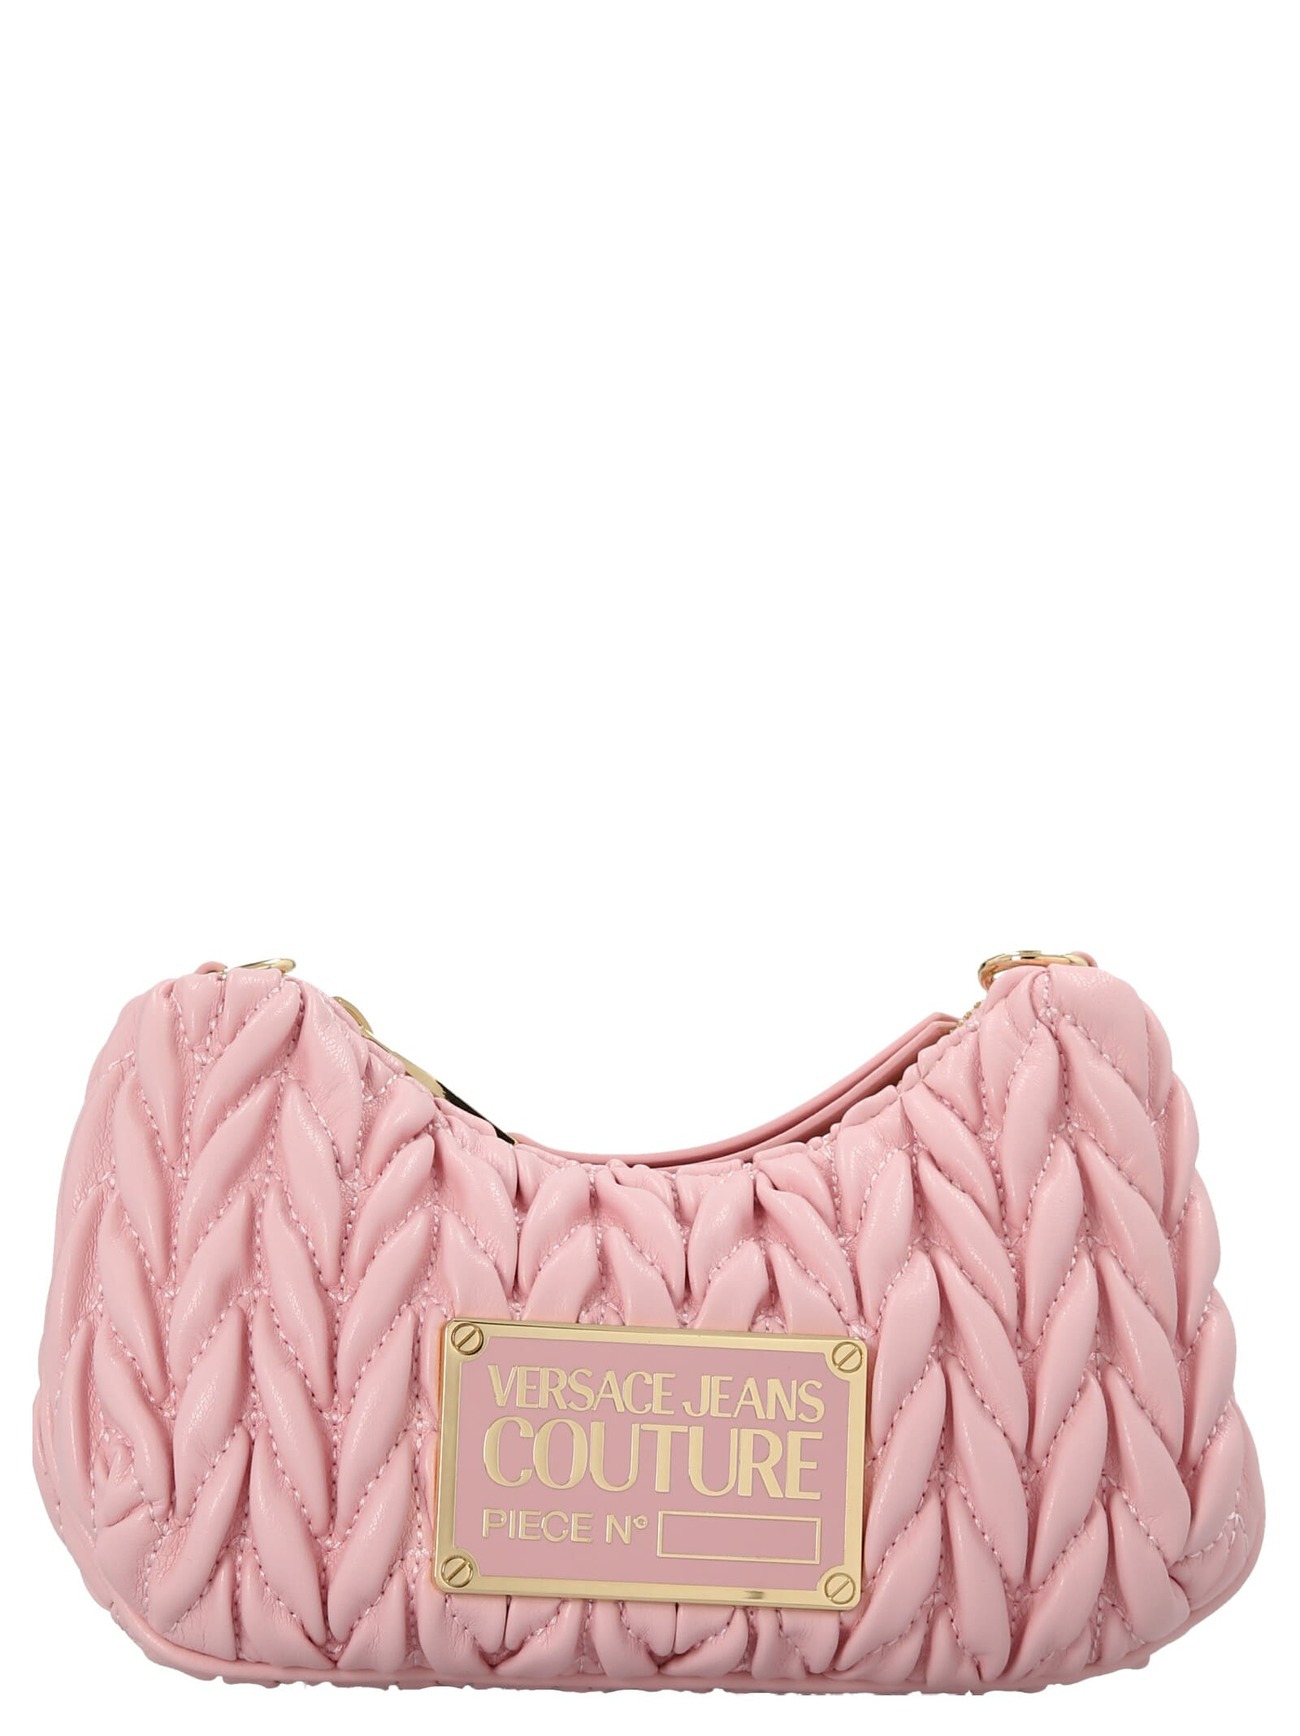 Versace Jeans Couture Logo Shoulder Bag in pink